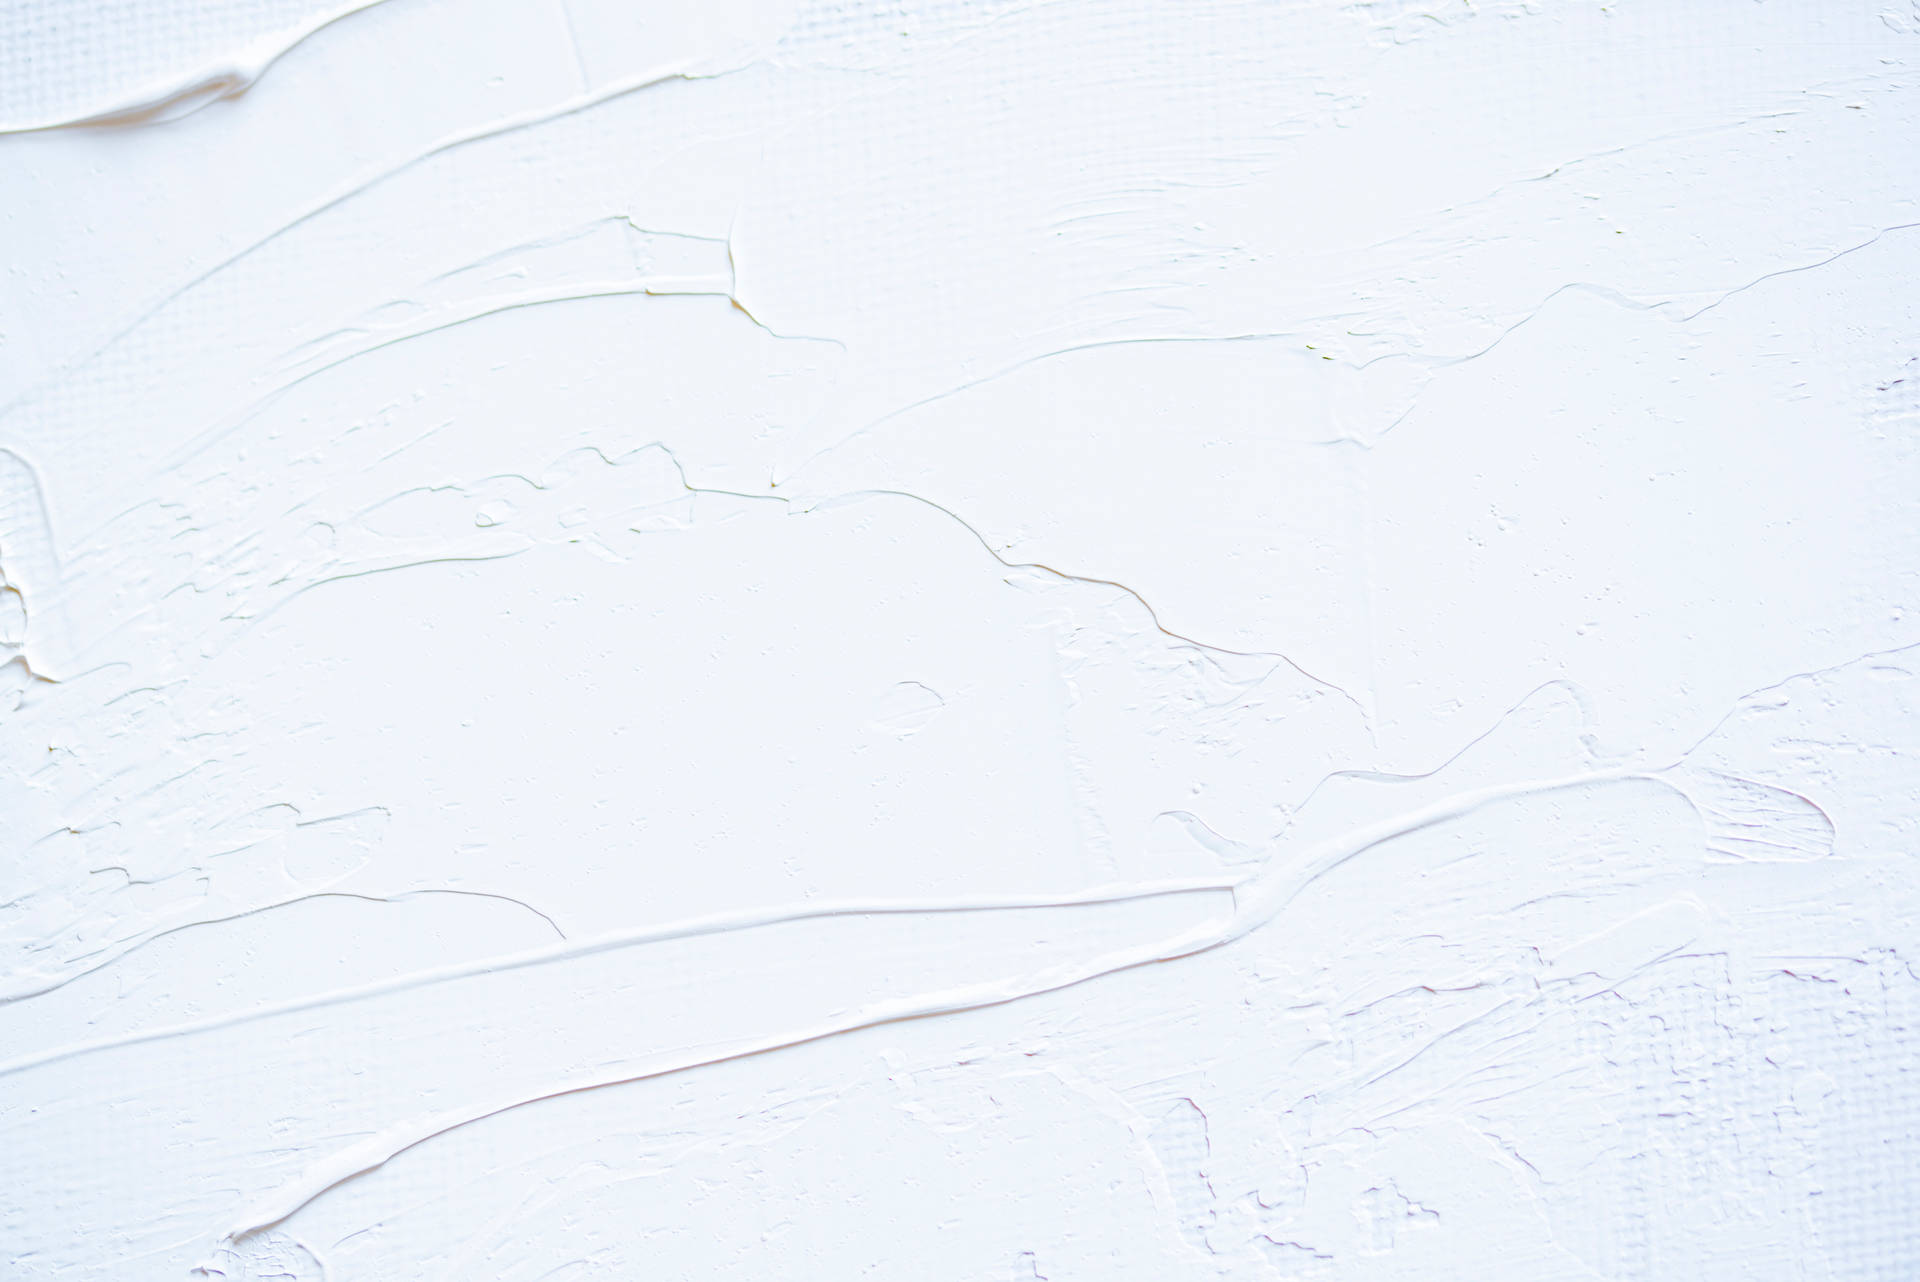 Elegance Of White Abstract Art Wallpaper